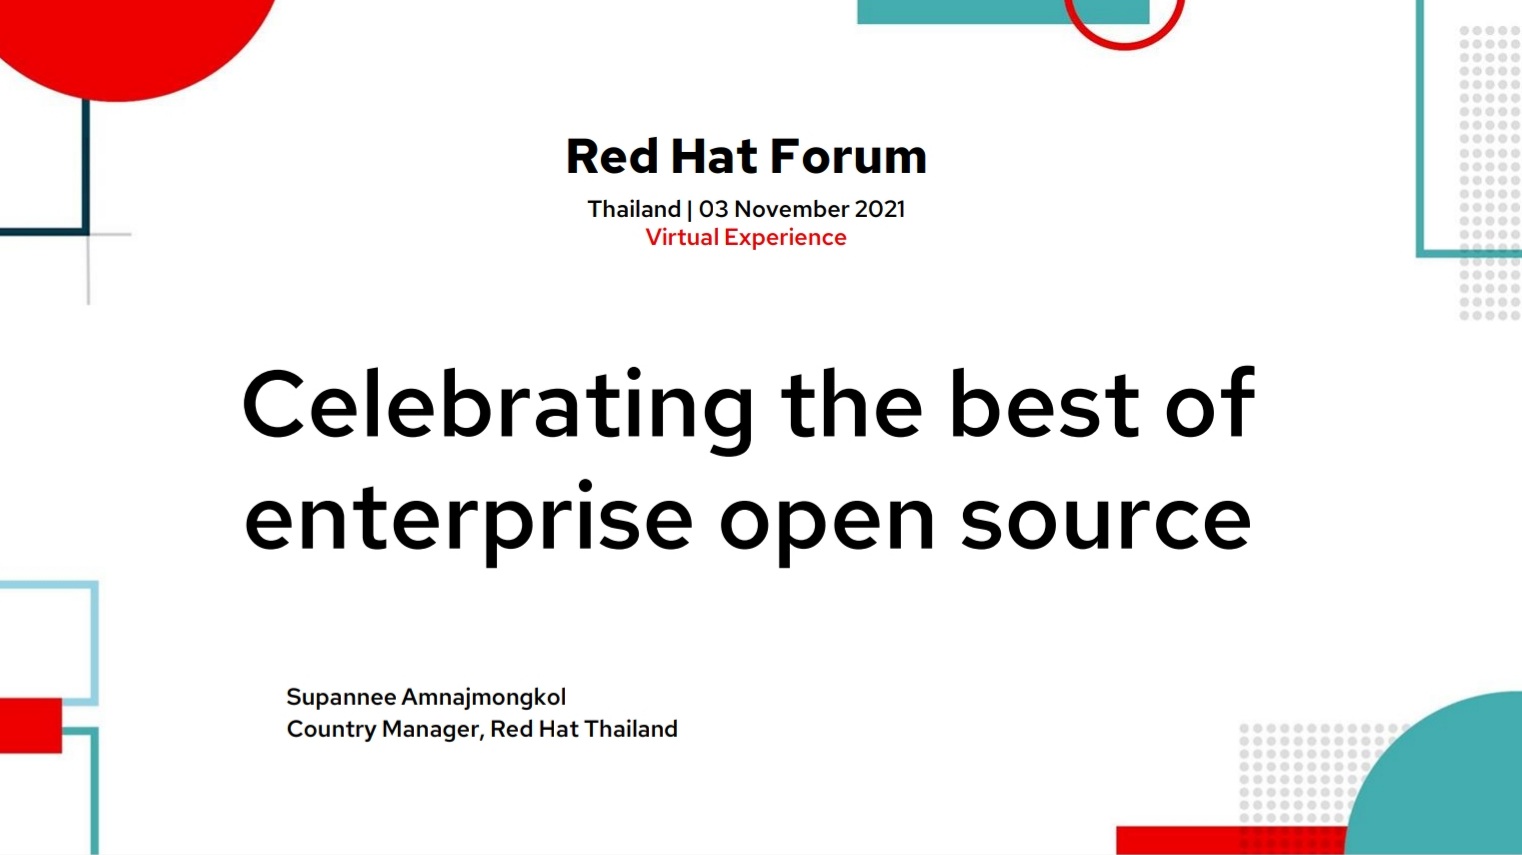 Red Hat Forum Asia Pacific 2021 เร่งนวัตกรรมในโลกยุคไฮบริด เปิดโอกาสให้ผู้เข้าร่วมงานได้เรียนรู้และแบ่งปันเรื่องราวเกี่ยวกับนวัตกรรมแบบเปิดเปลี่ยนผ่านไปสู่ดิจิทัล และความยืดหยุ่นในการใช้เทคโนโลยีโอเพ่นซอร์ส